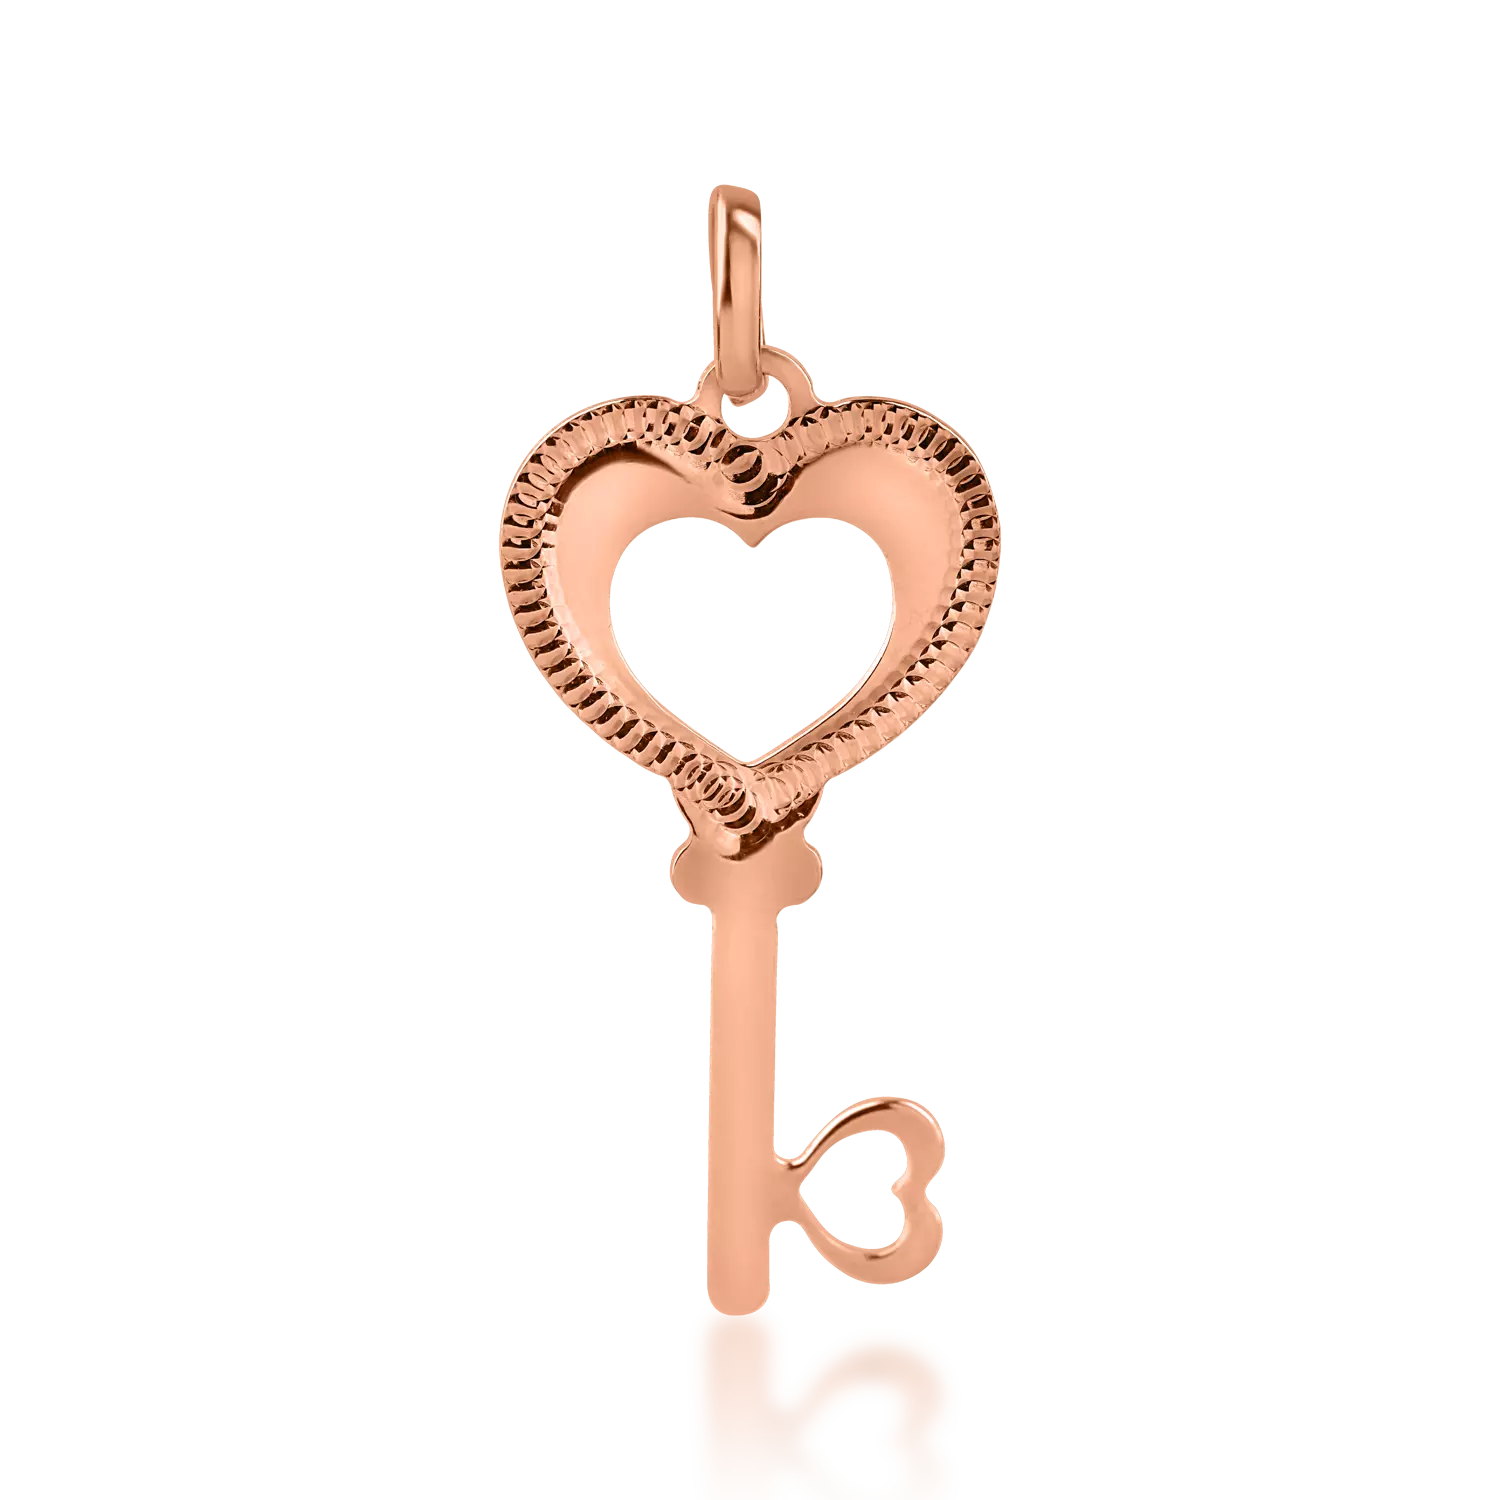 Rose gold key pendant